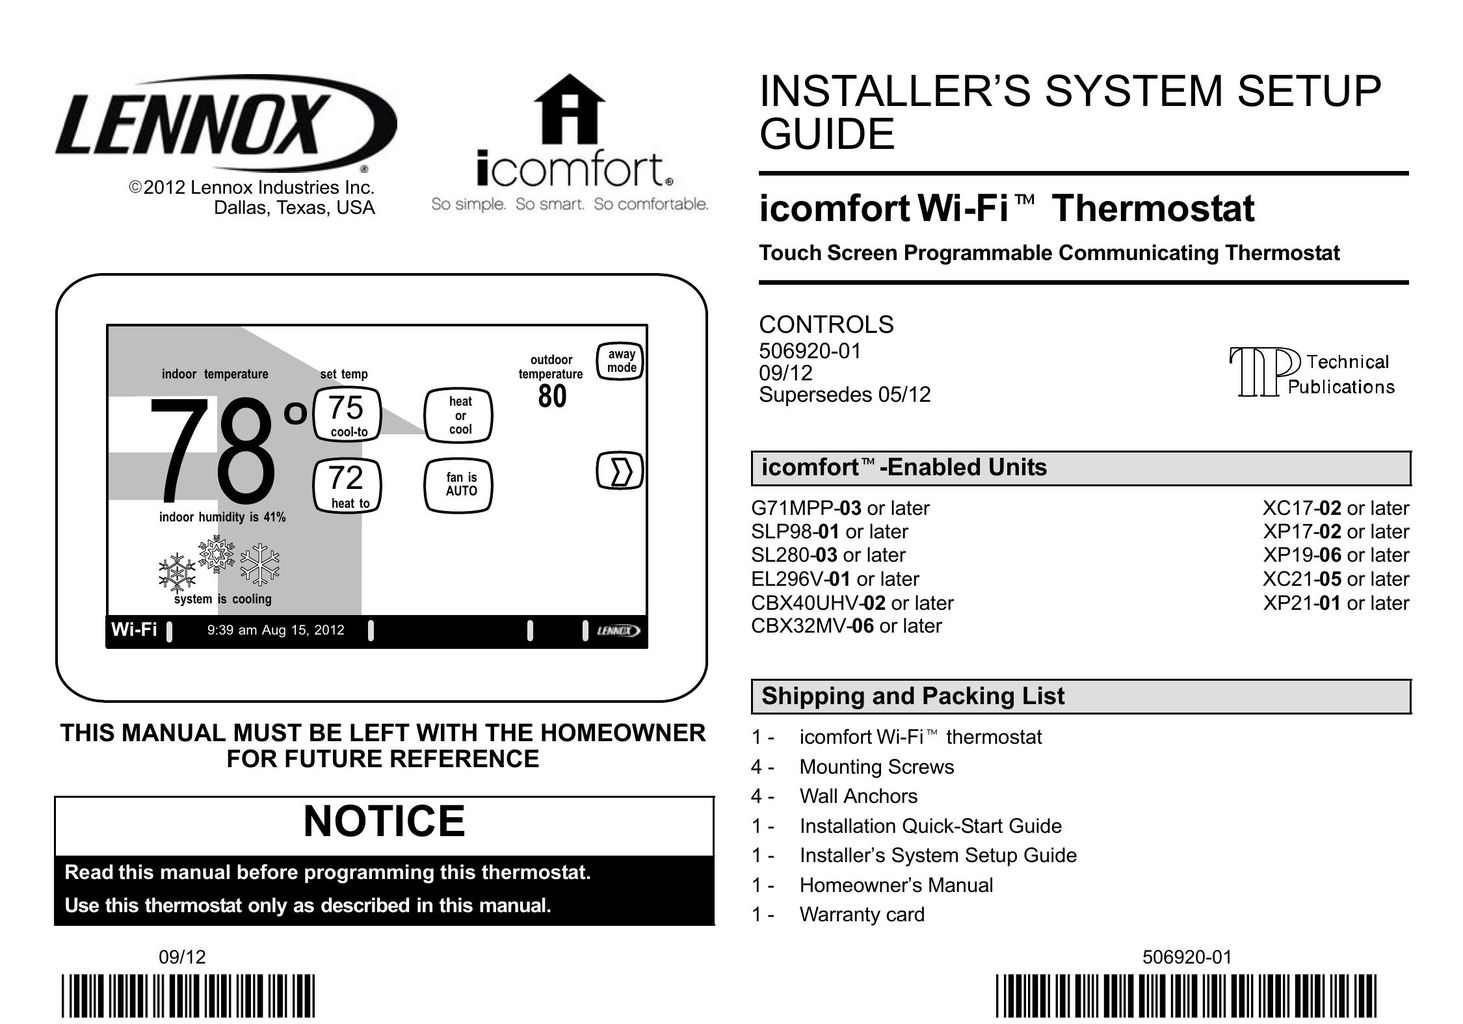 Lennox International Inc. G71MPP03 Thermostat User Manual